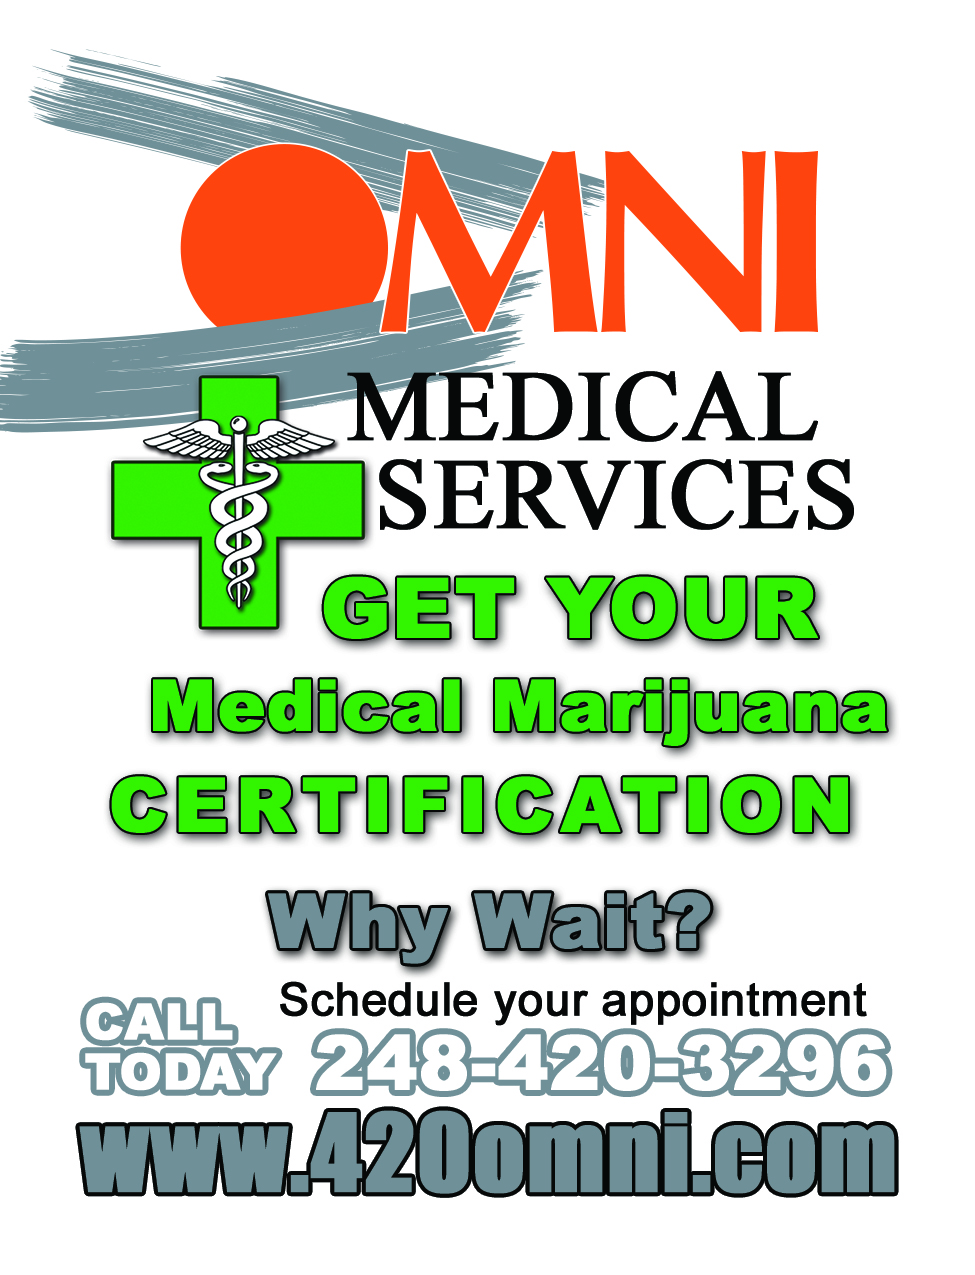 Omni Medical Marijuana Services